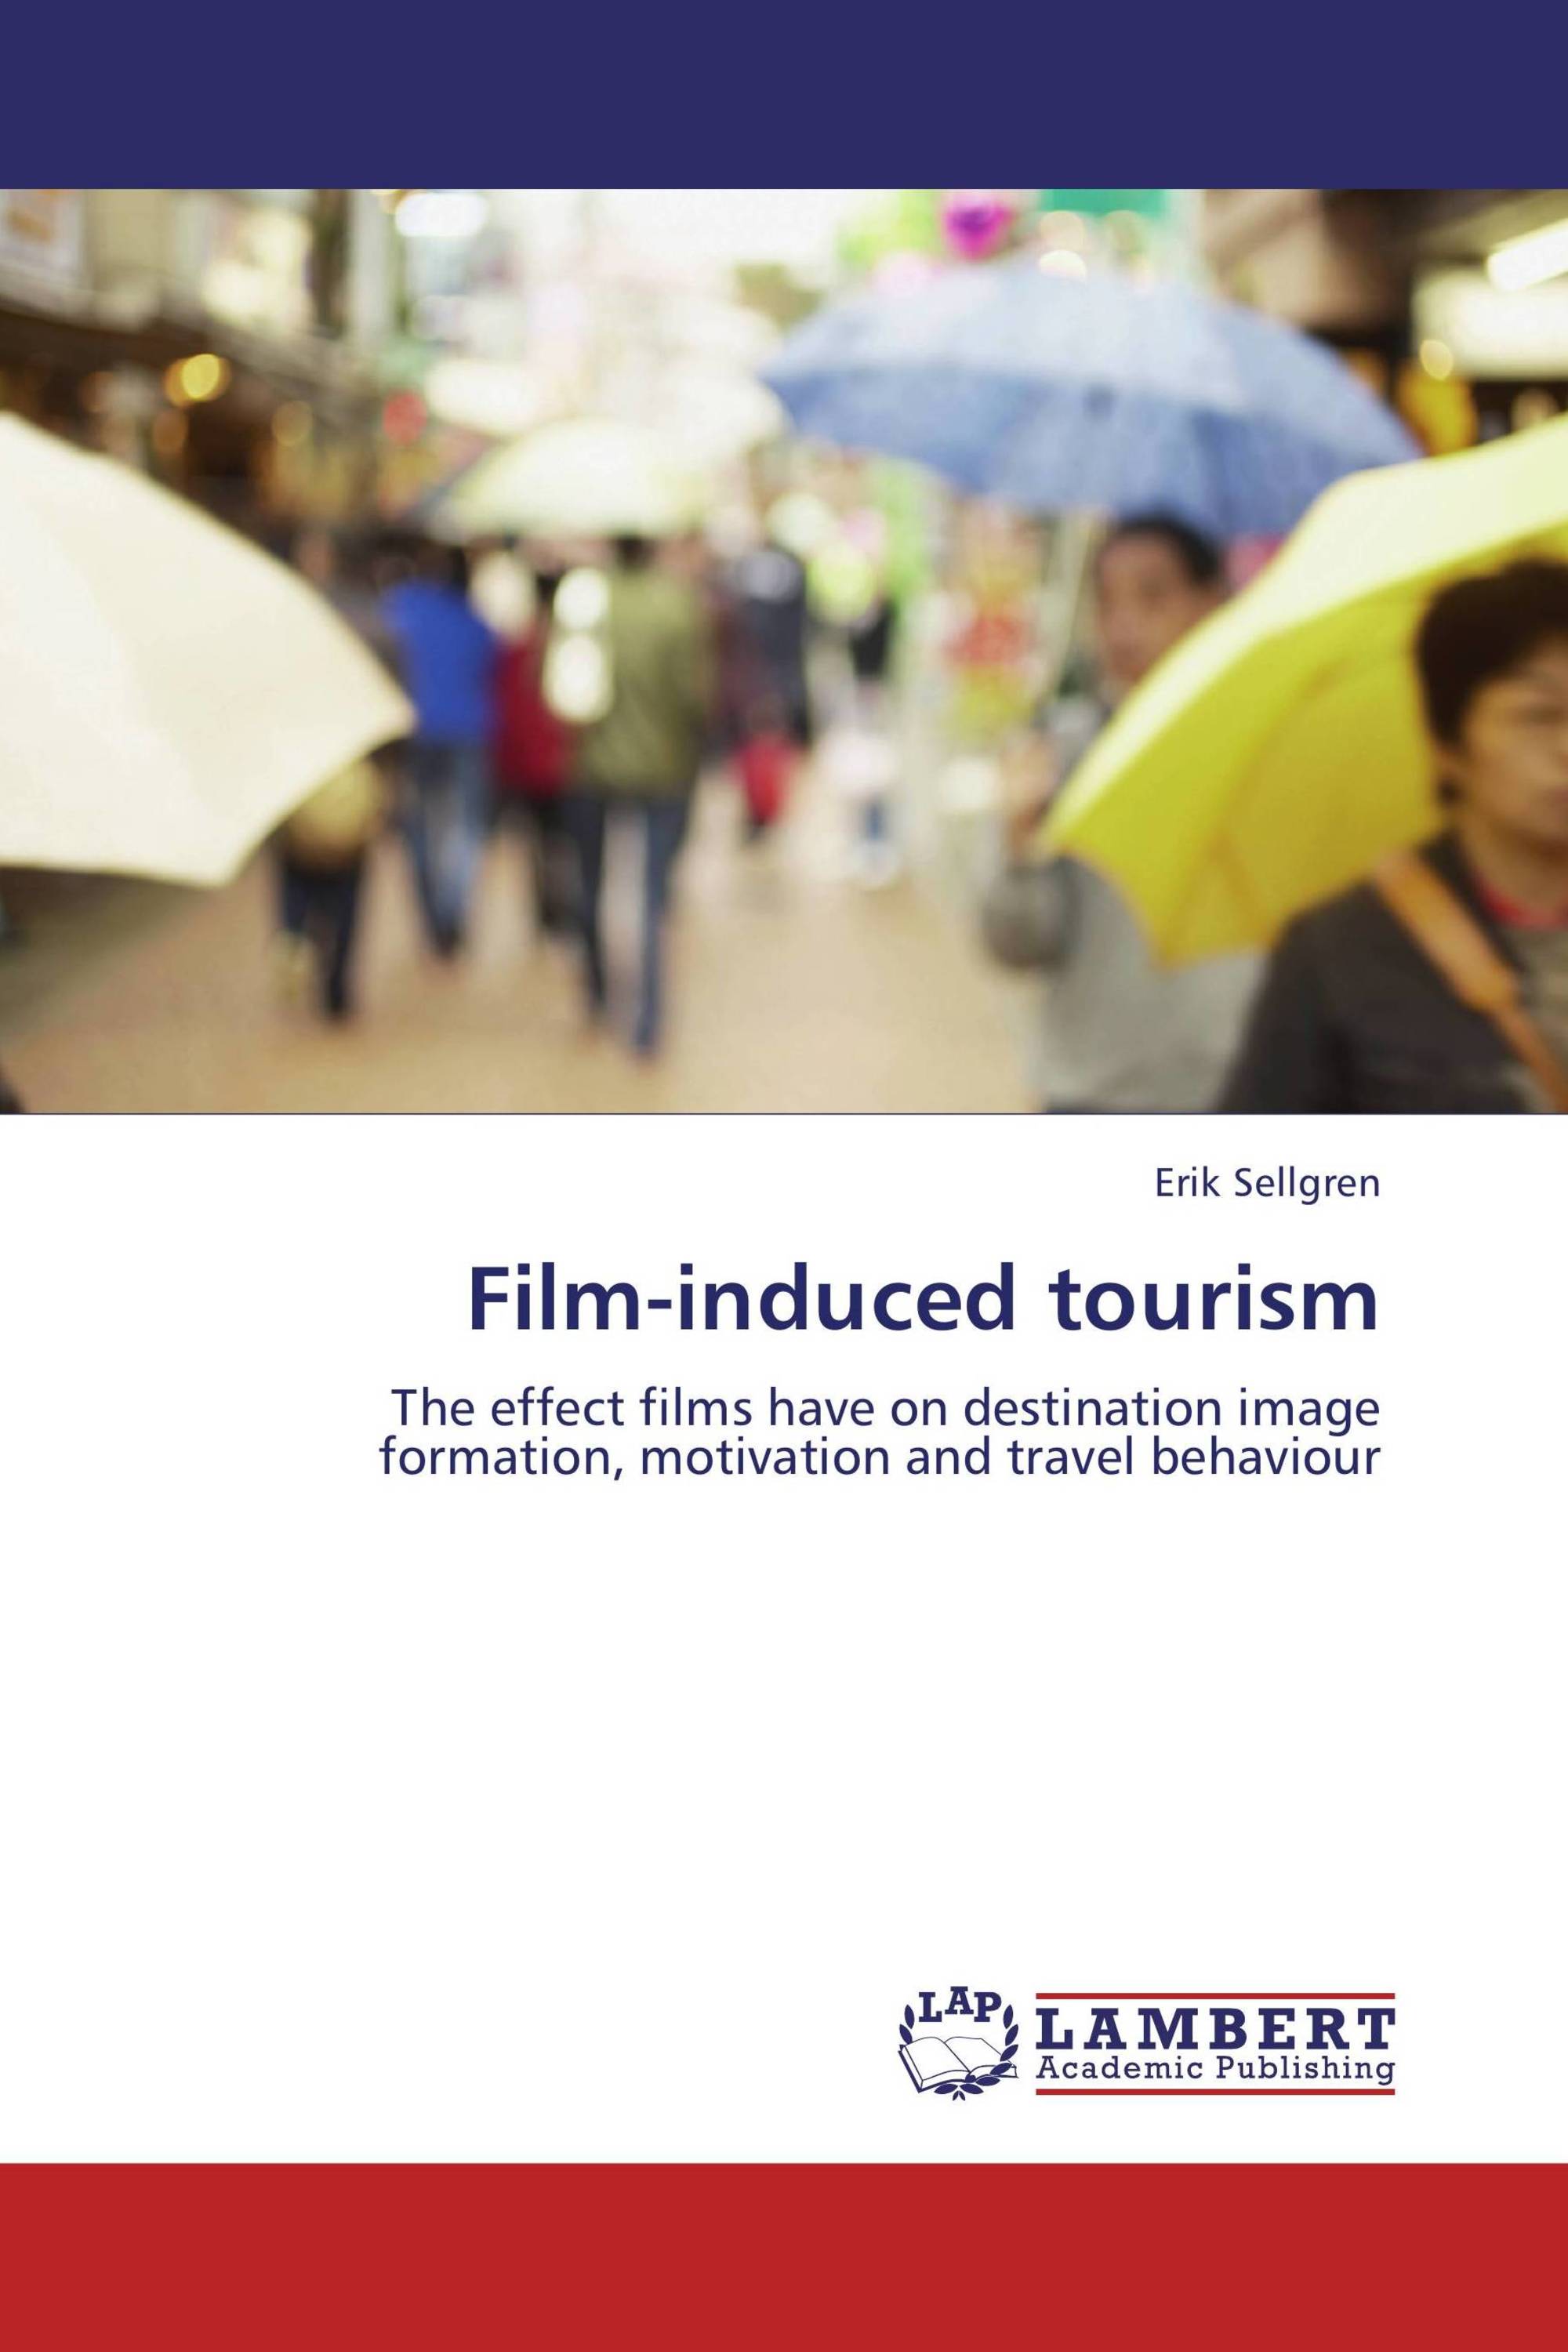 film tourism pdf